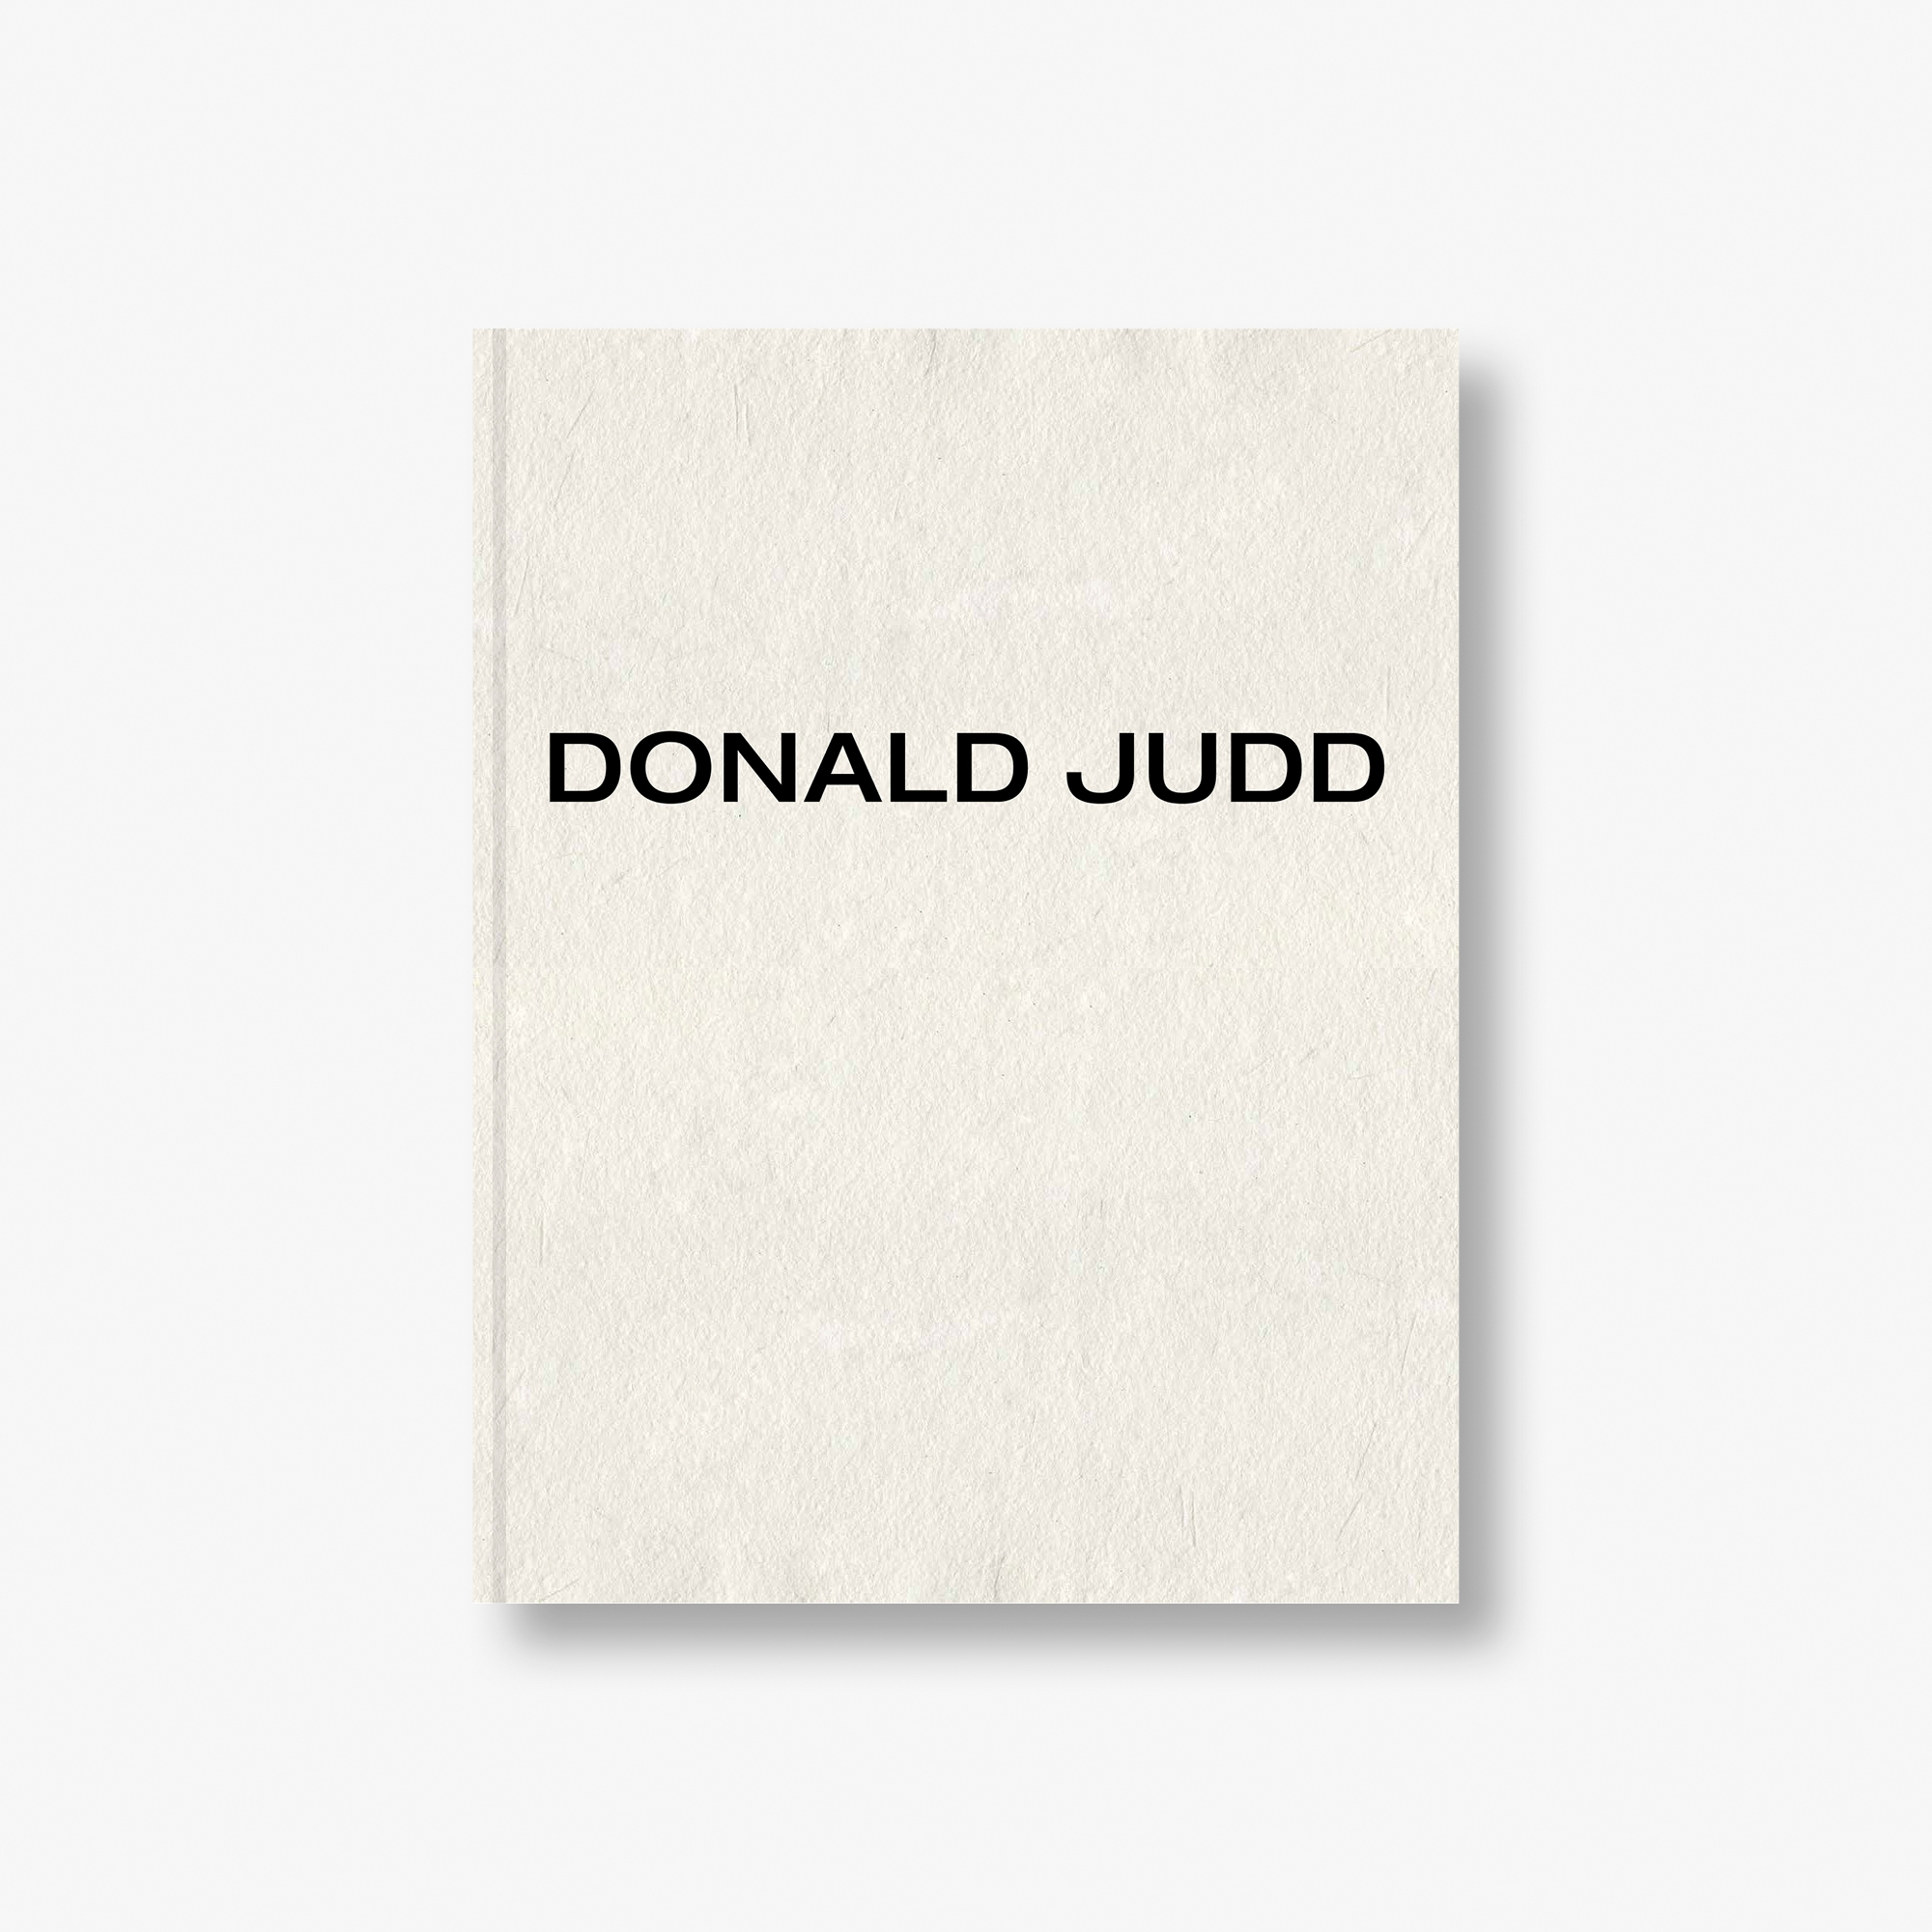 Donald Judd 2014